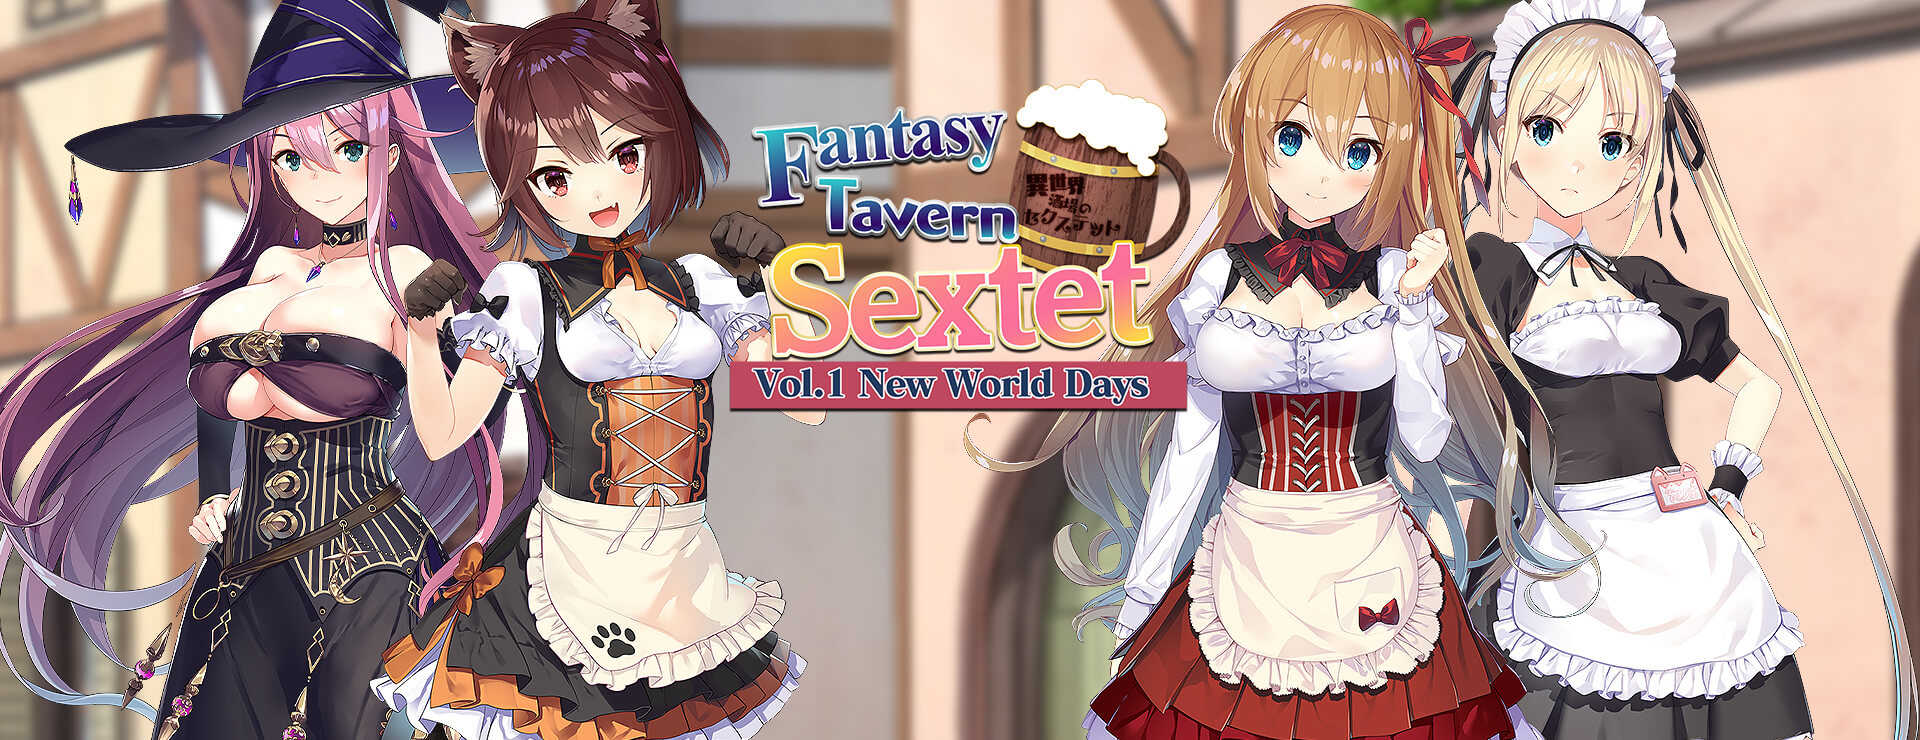 Fantasy Tavern Sextet - Vol.1 New World Days - Novela Visual Juego